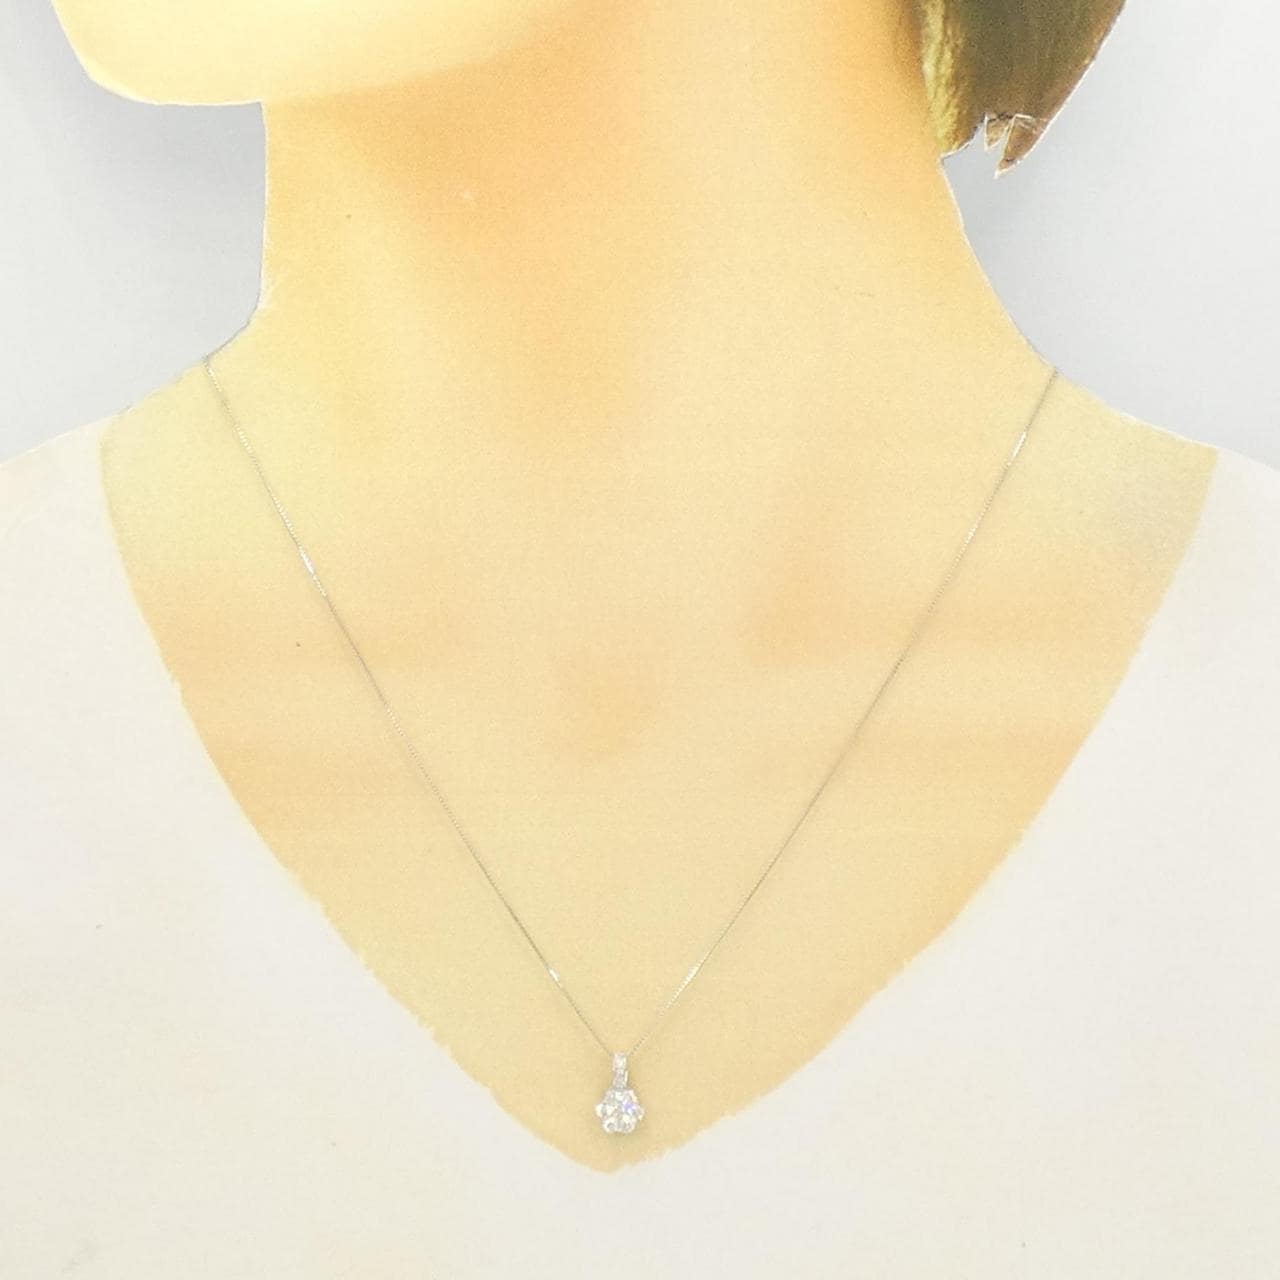 K18WG flower Diamond necklace 0.34CT